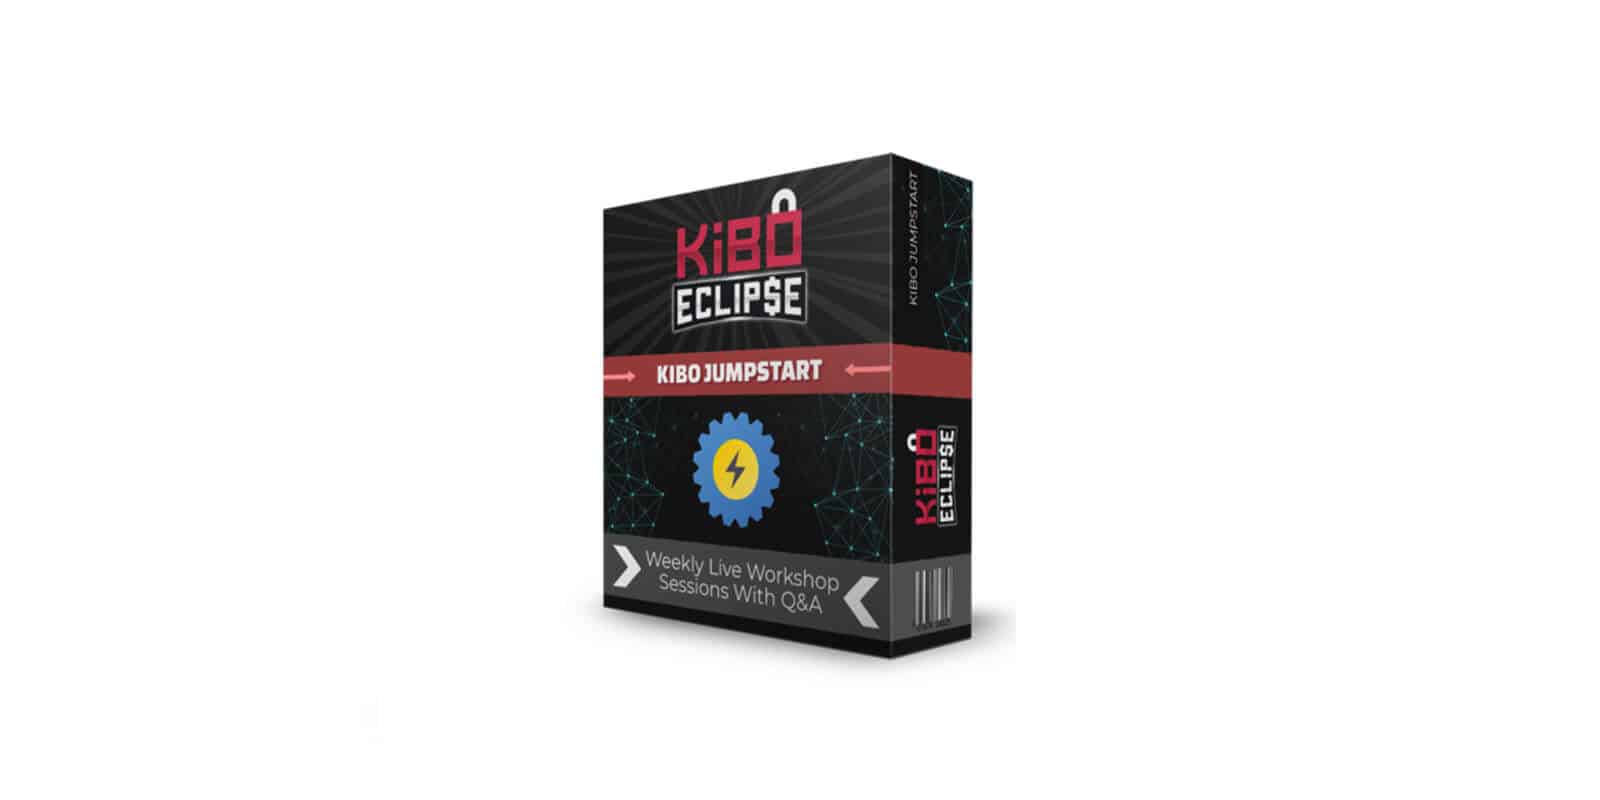 Kibo eclipse Bonus Kibo Jumpstart